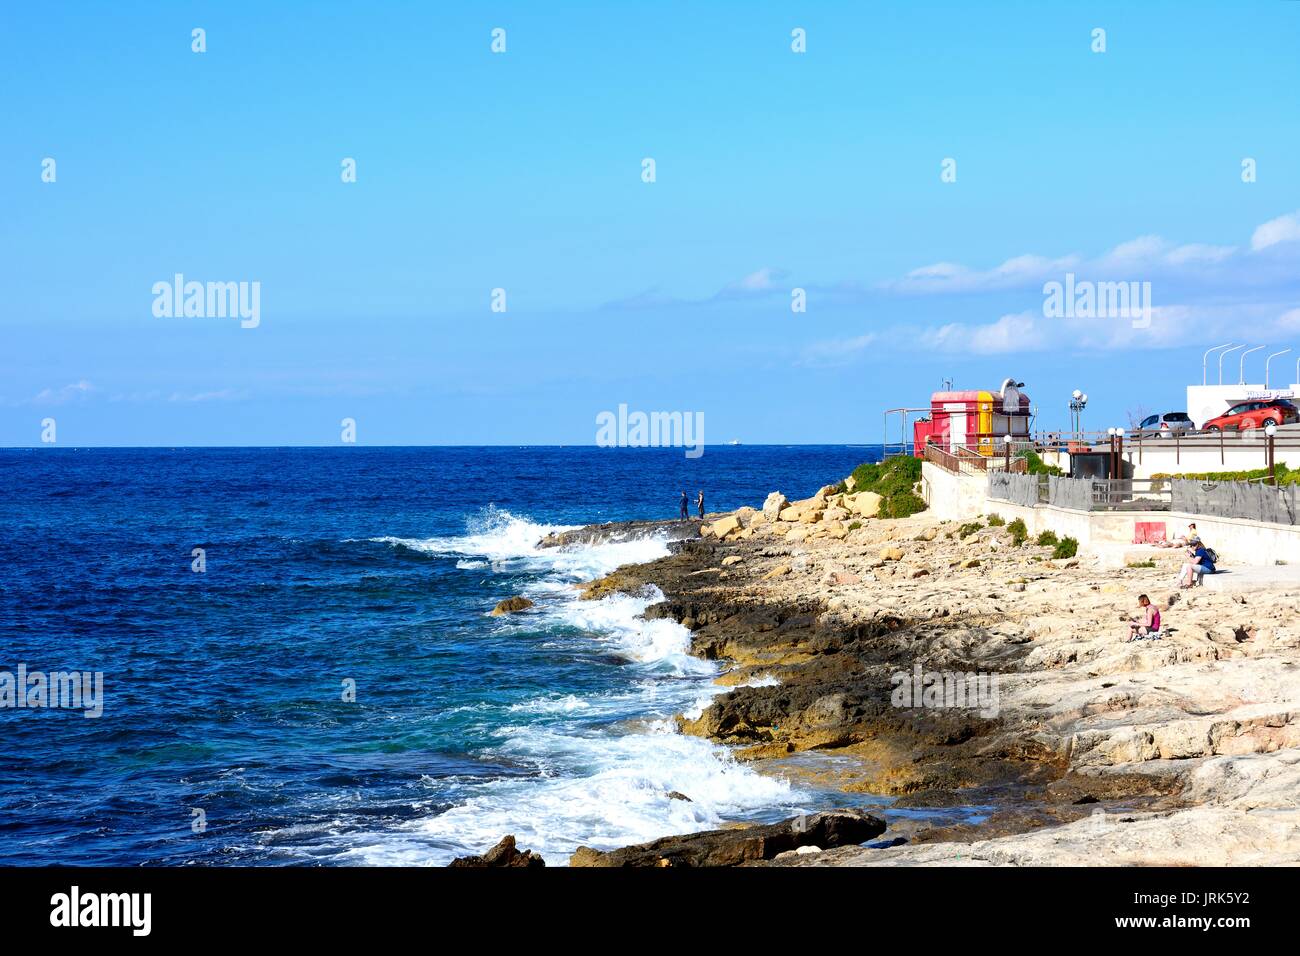 Tourists relaxing on the rocky shoreline, Bugibba, Malta, Europe. Stock Photo